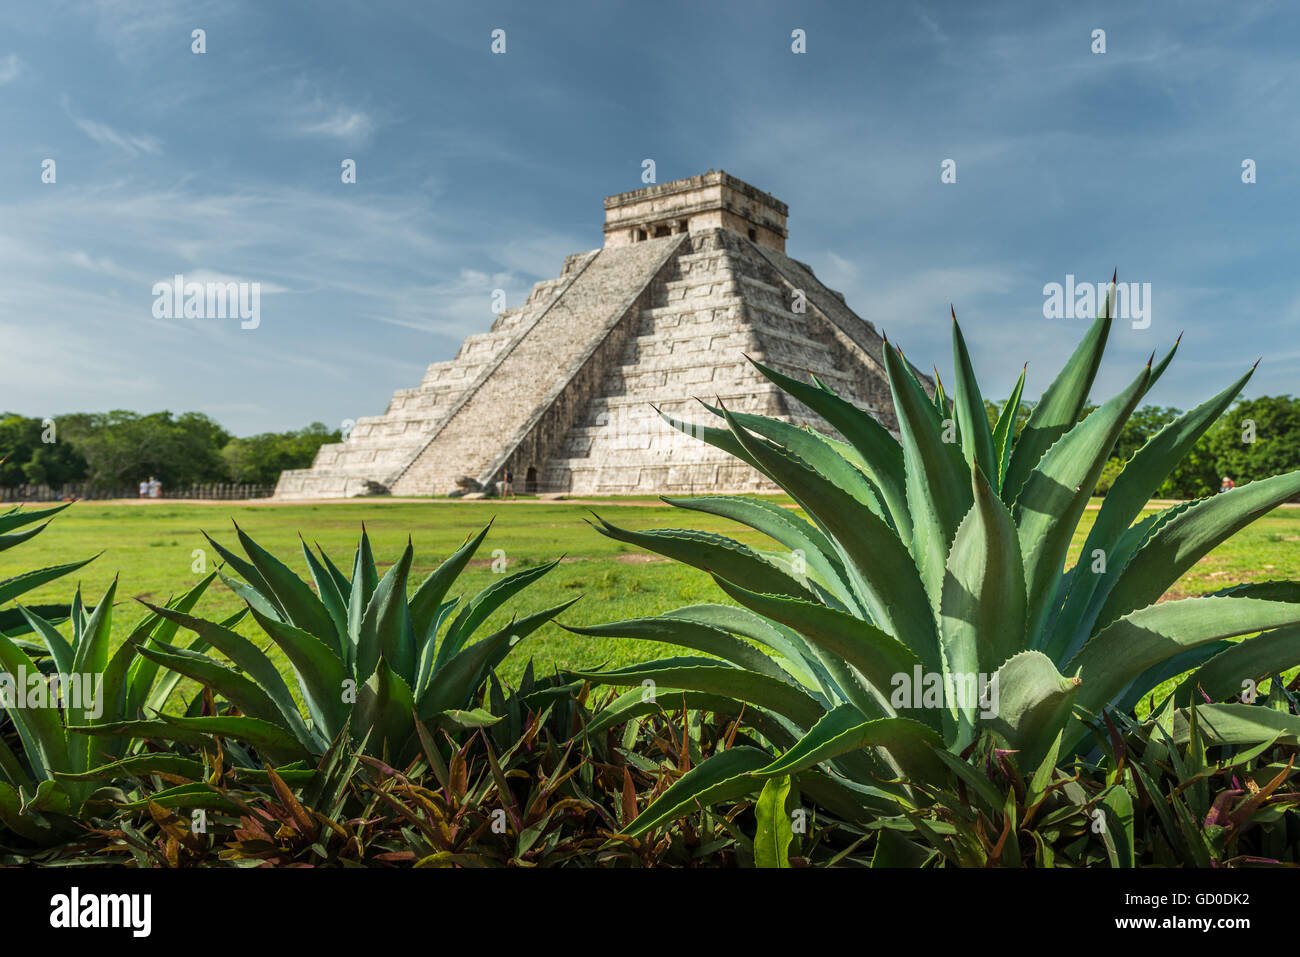 The ancient Pyramid of Kukulcan, or El Castillo, in Chichen Itza, Mexico. Stock Photo